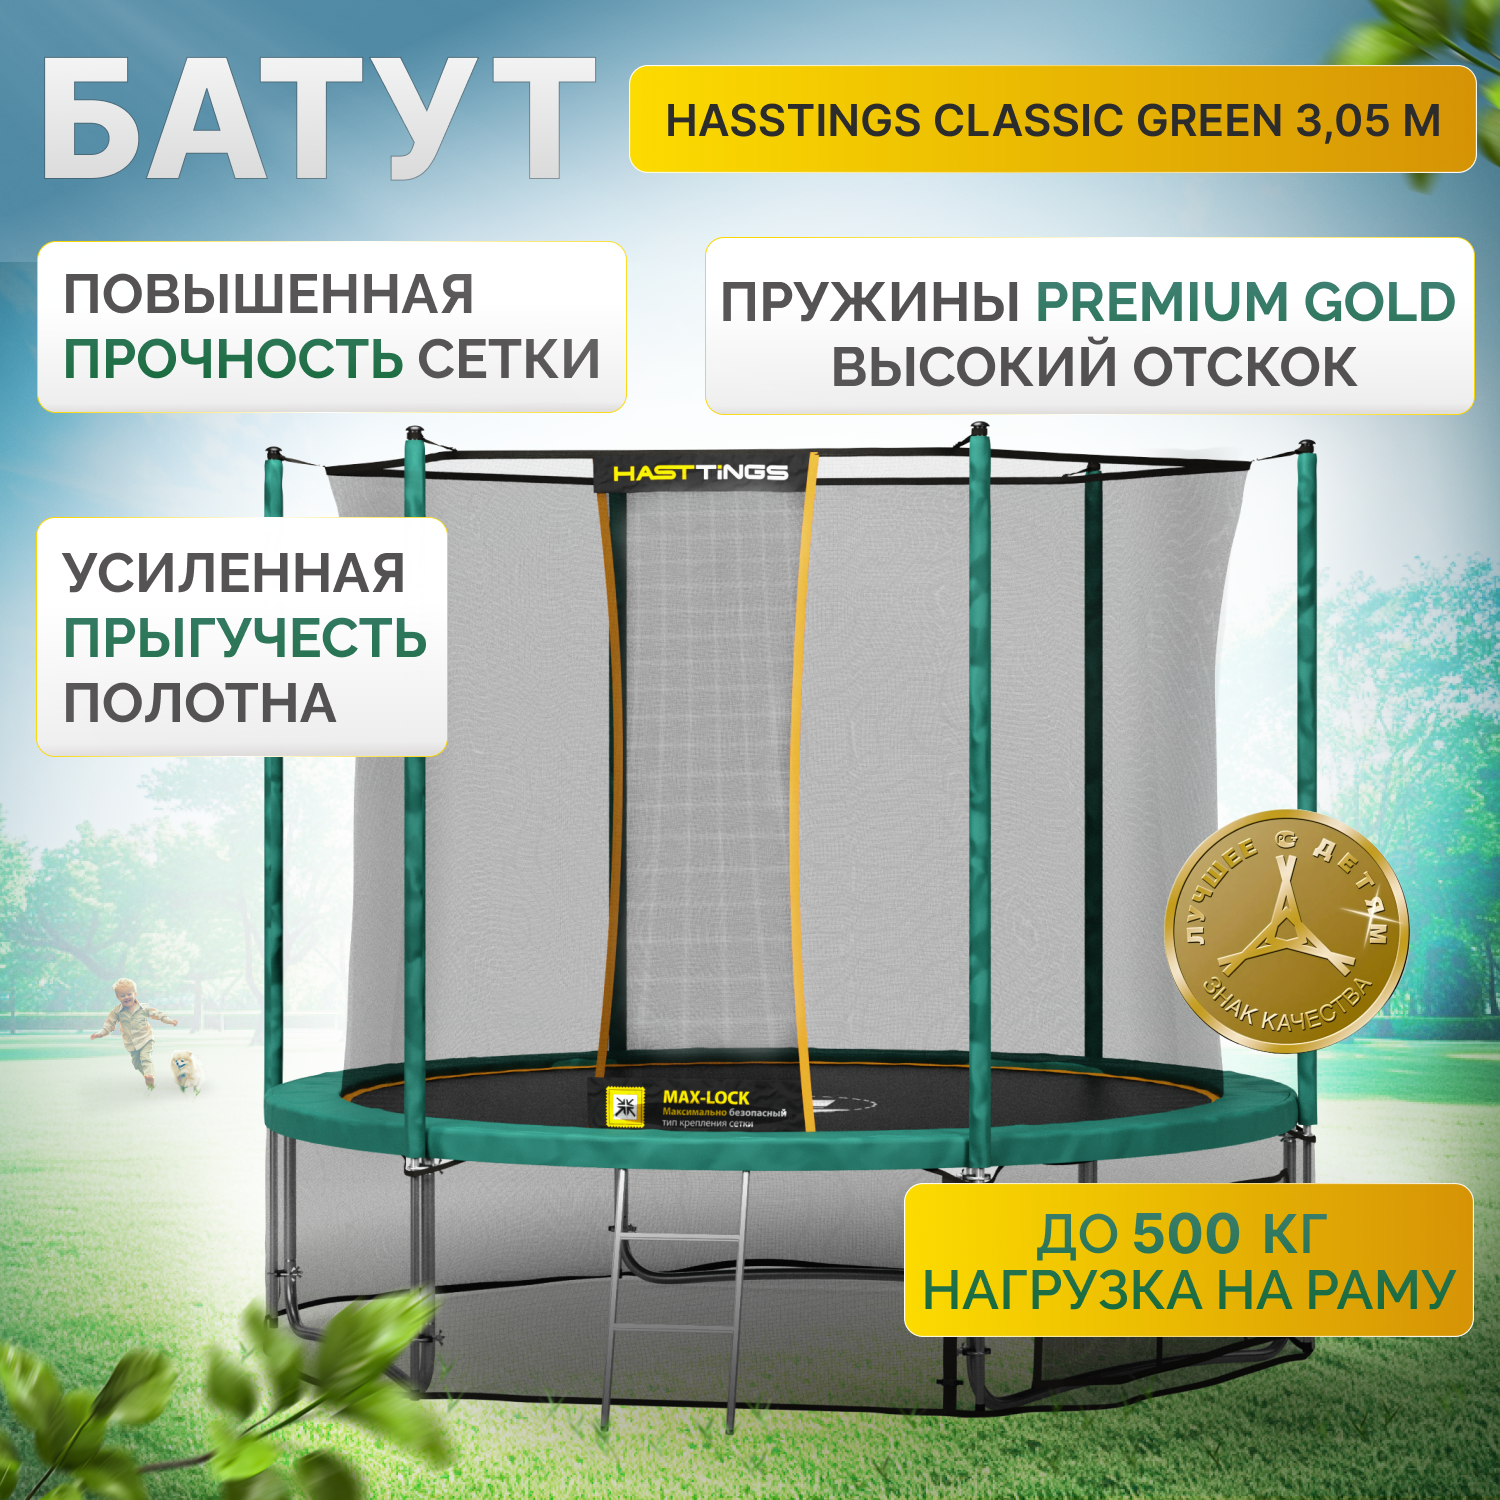 Батут Hasttings Classic Green 3,05